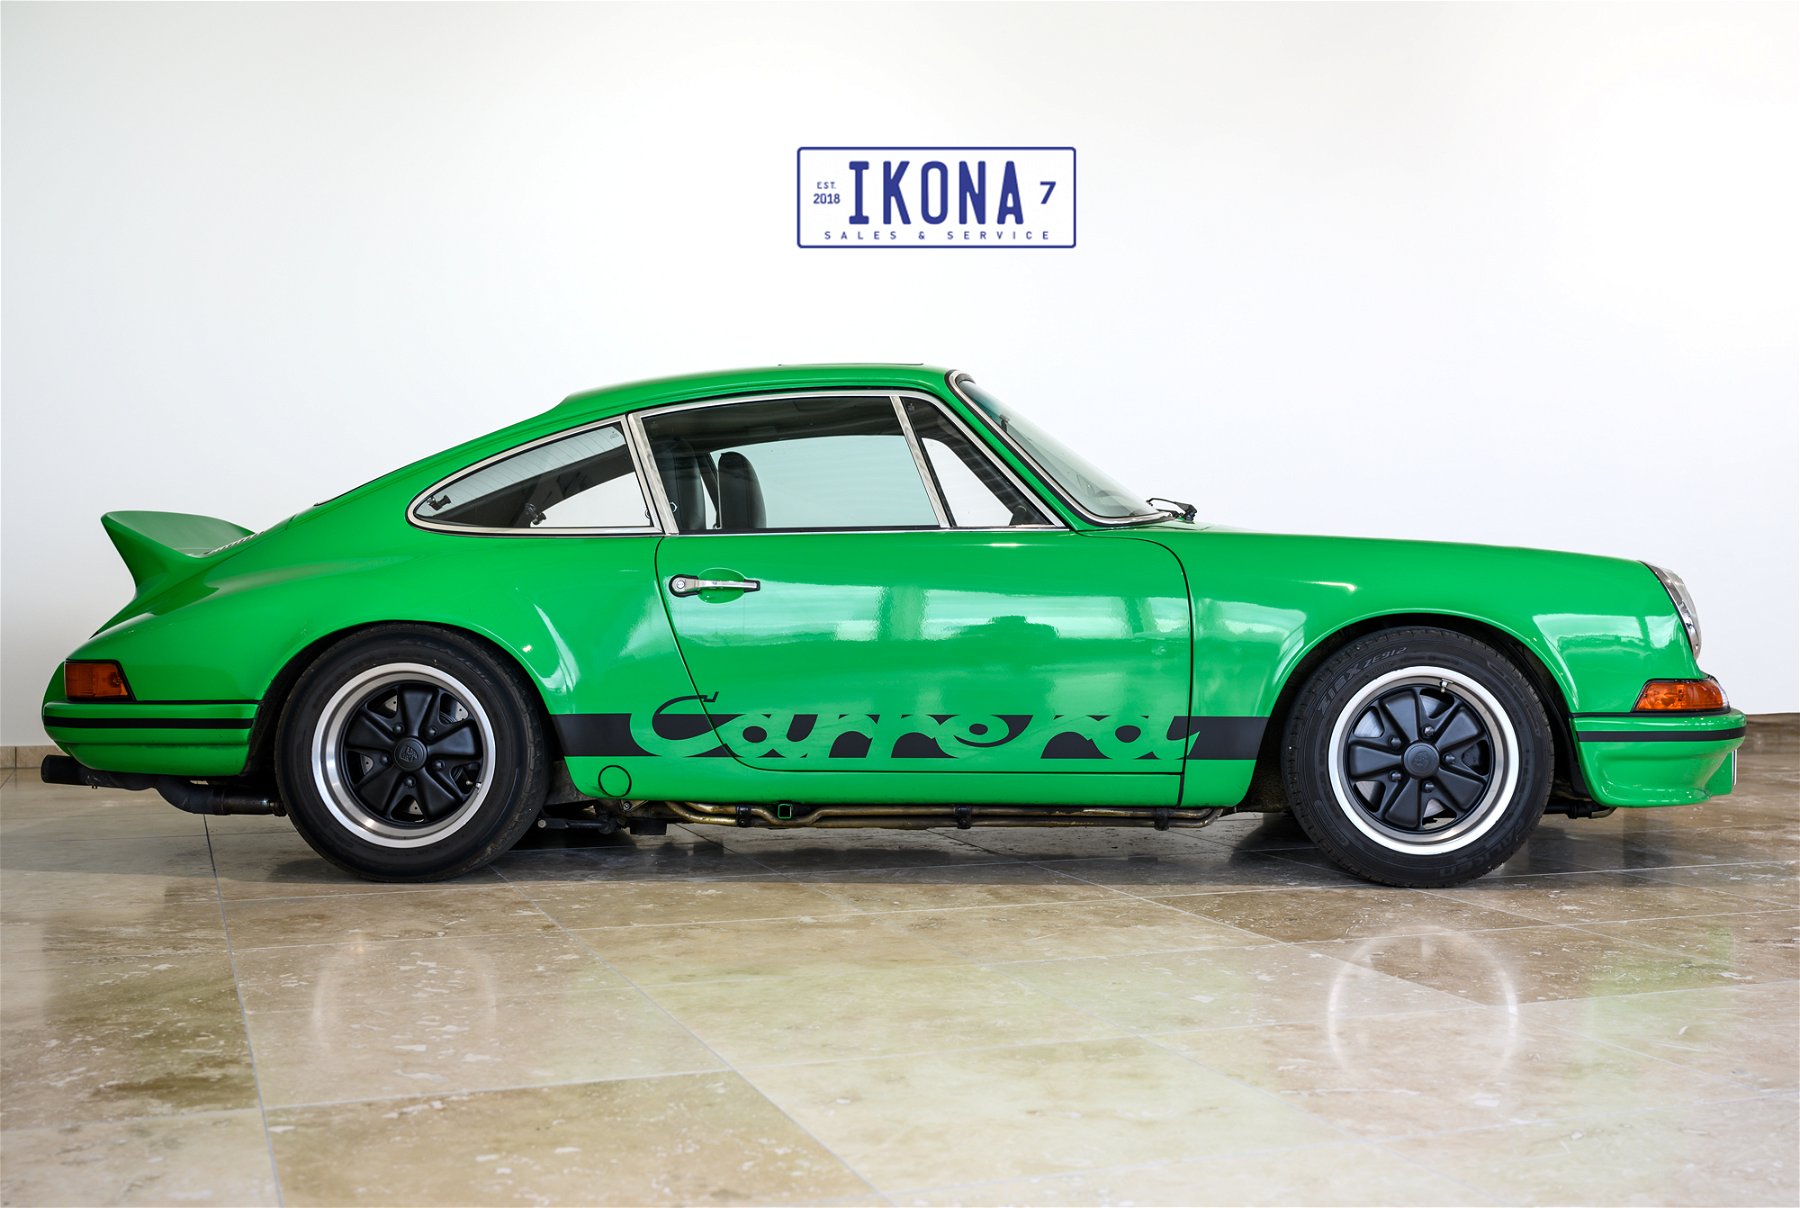 Partner portrait: ikonA7. Experience classic cars.